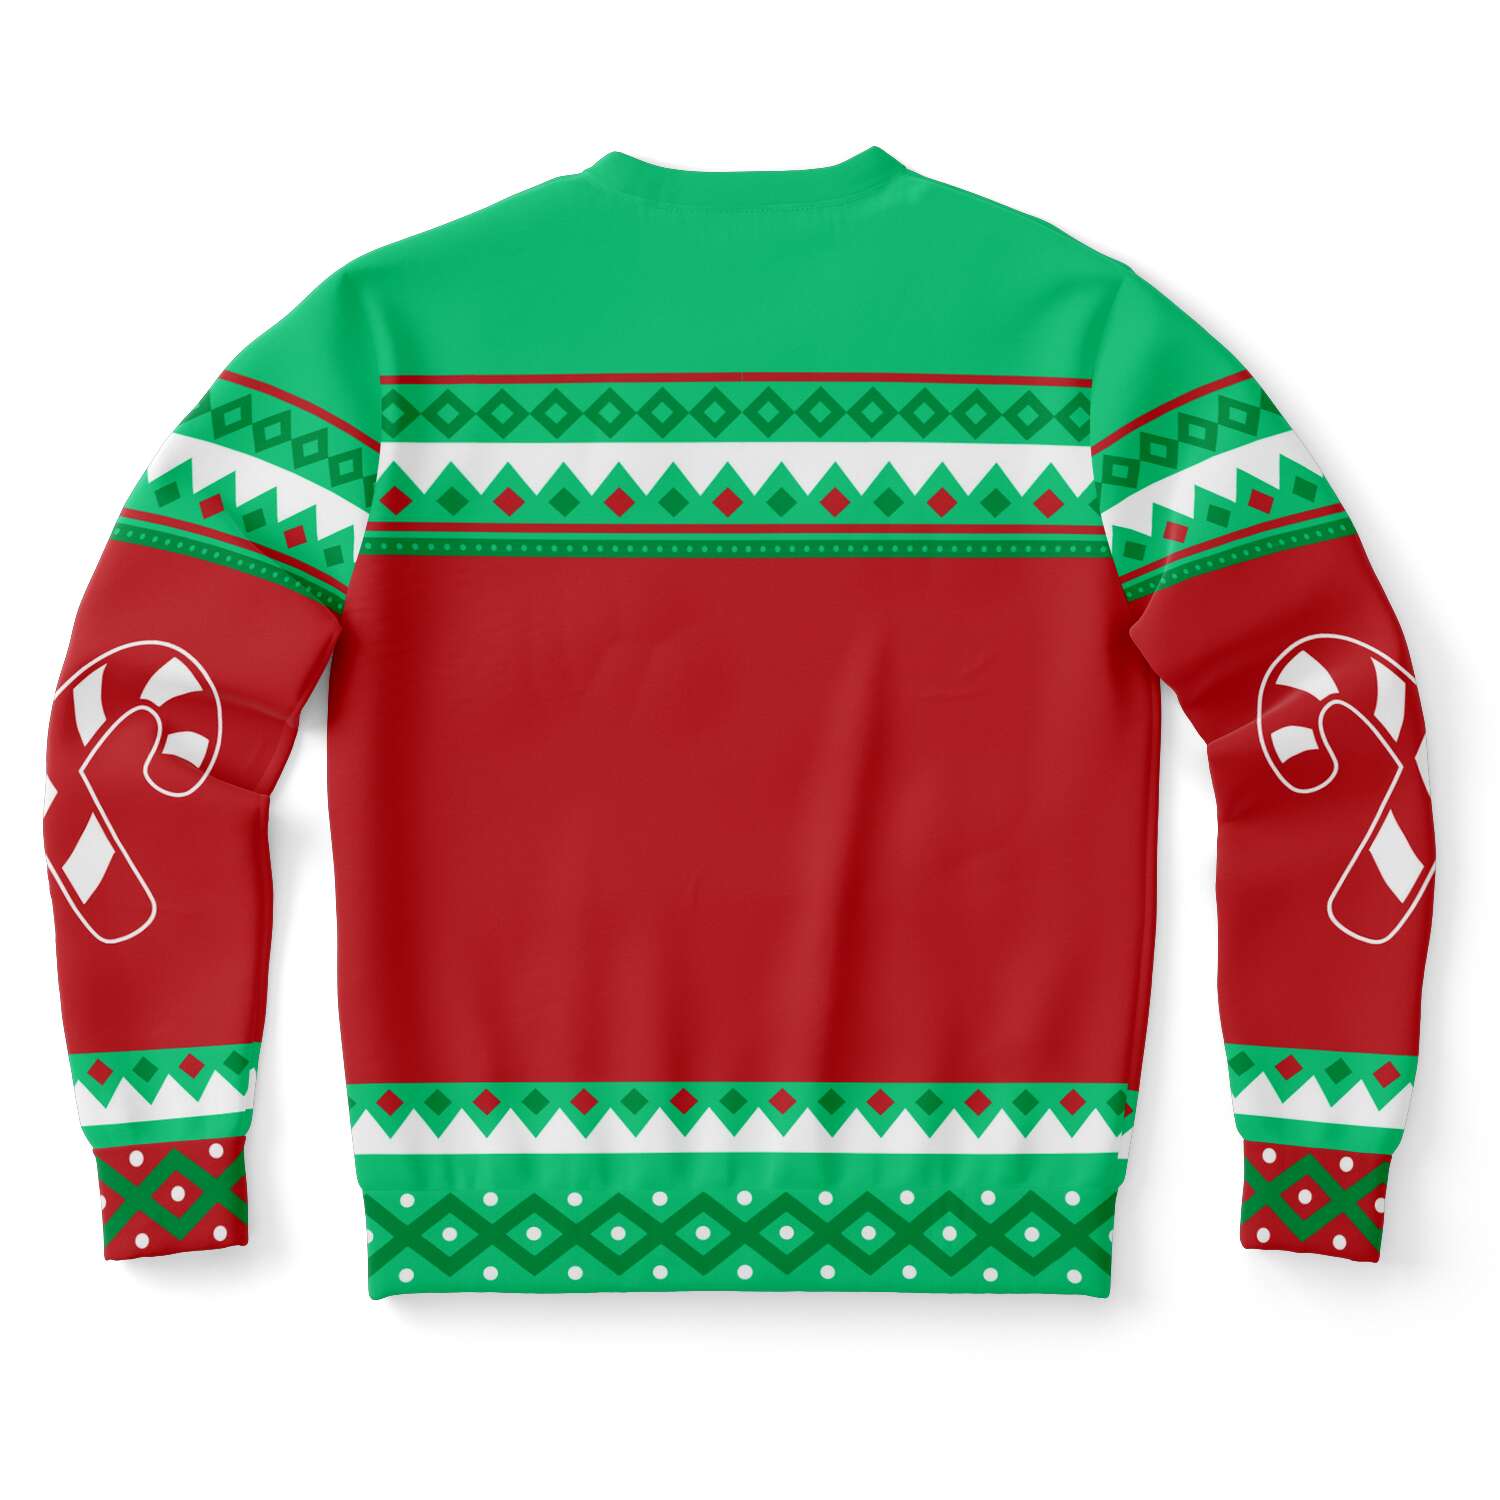 Ugly Christmas Sweater Untouchable Present Cactus - Chloe Lambertin